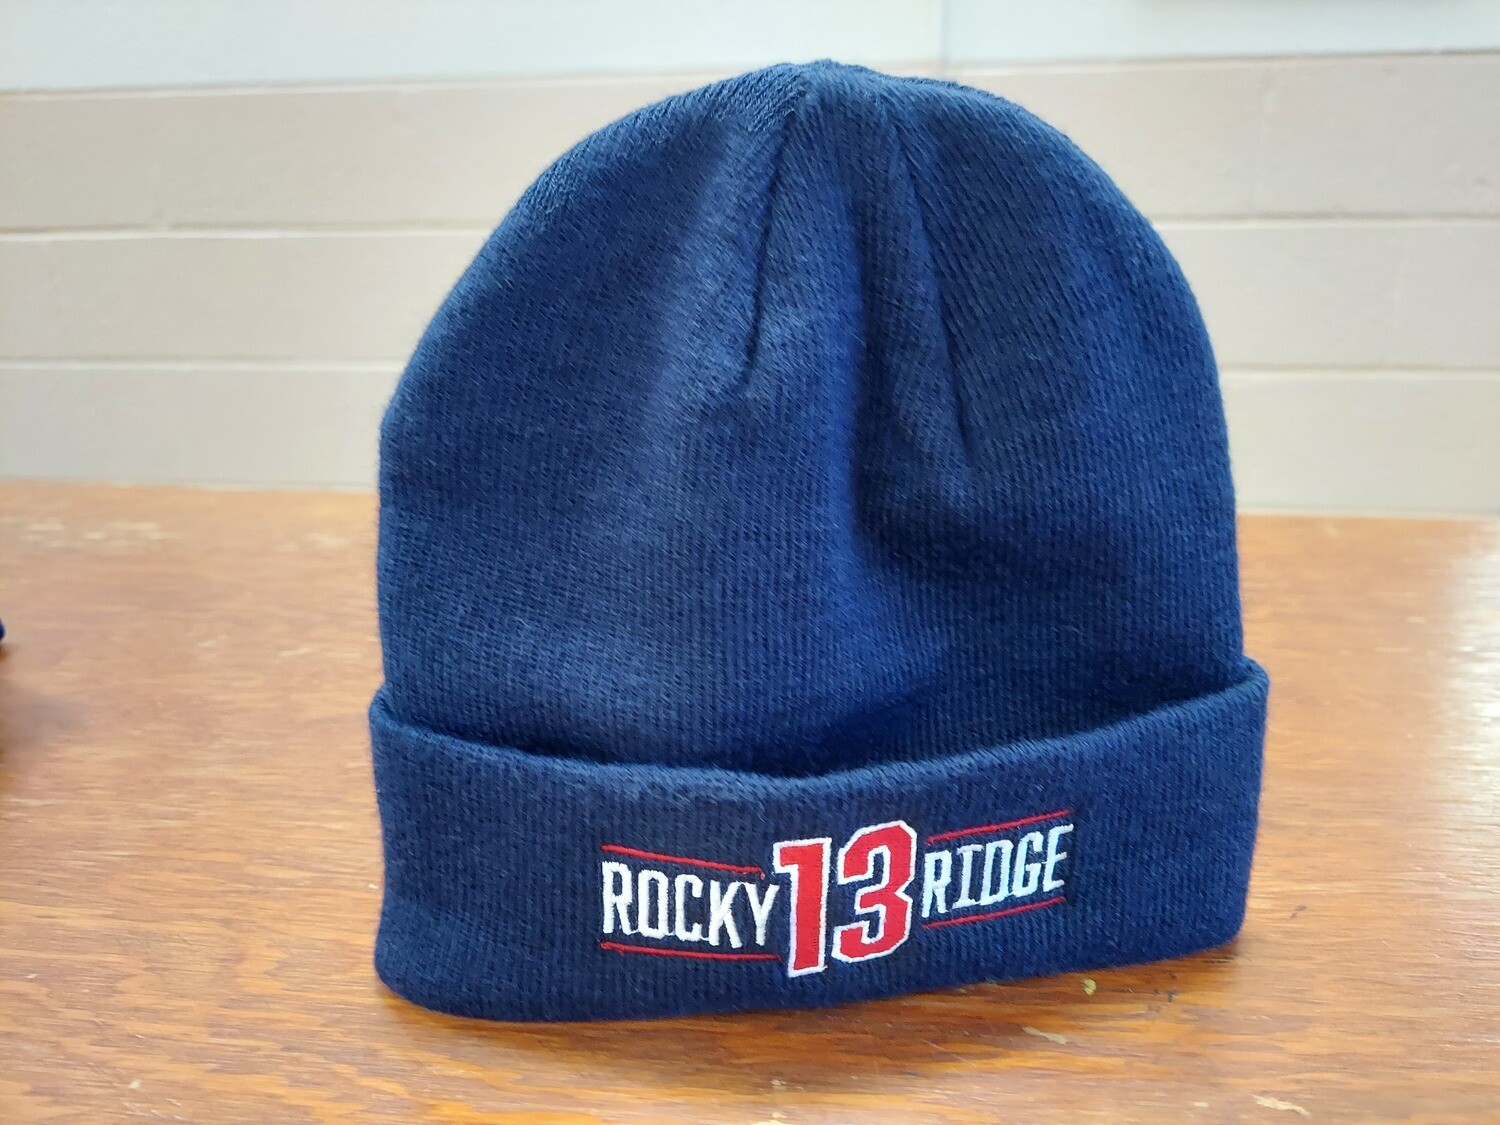 Embroidered Rocky Ridge 13 Beanie